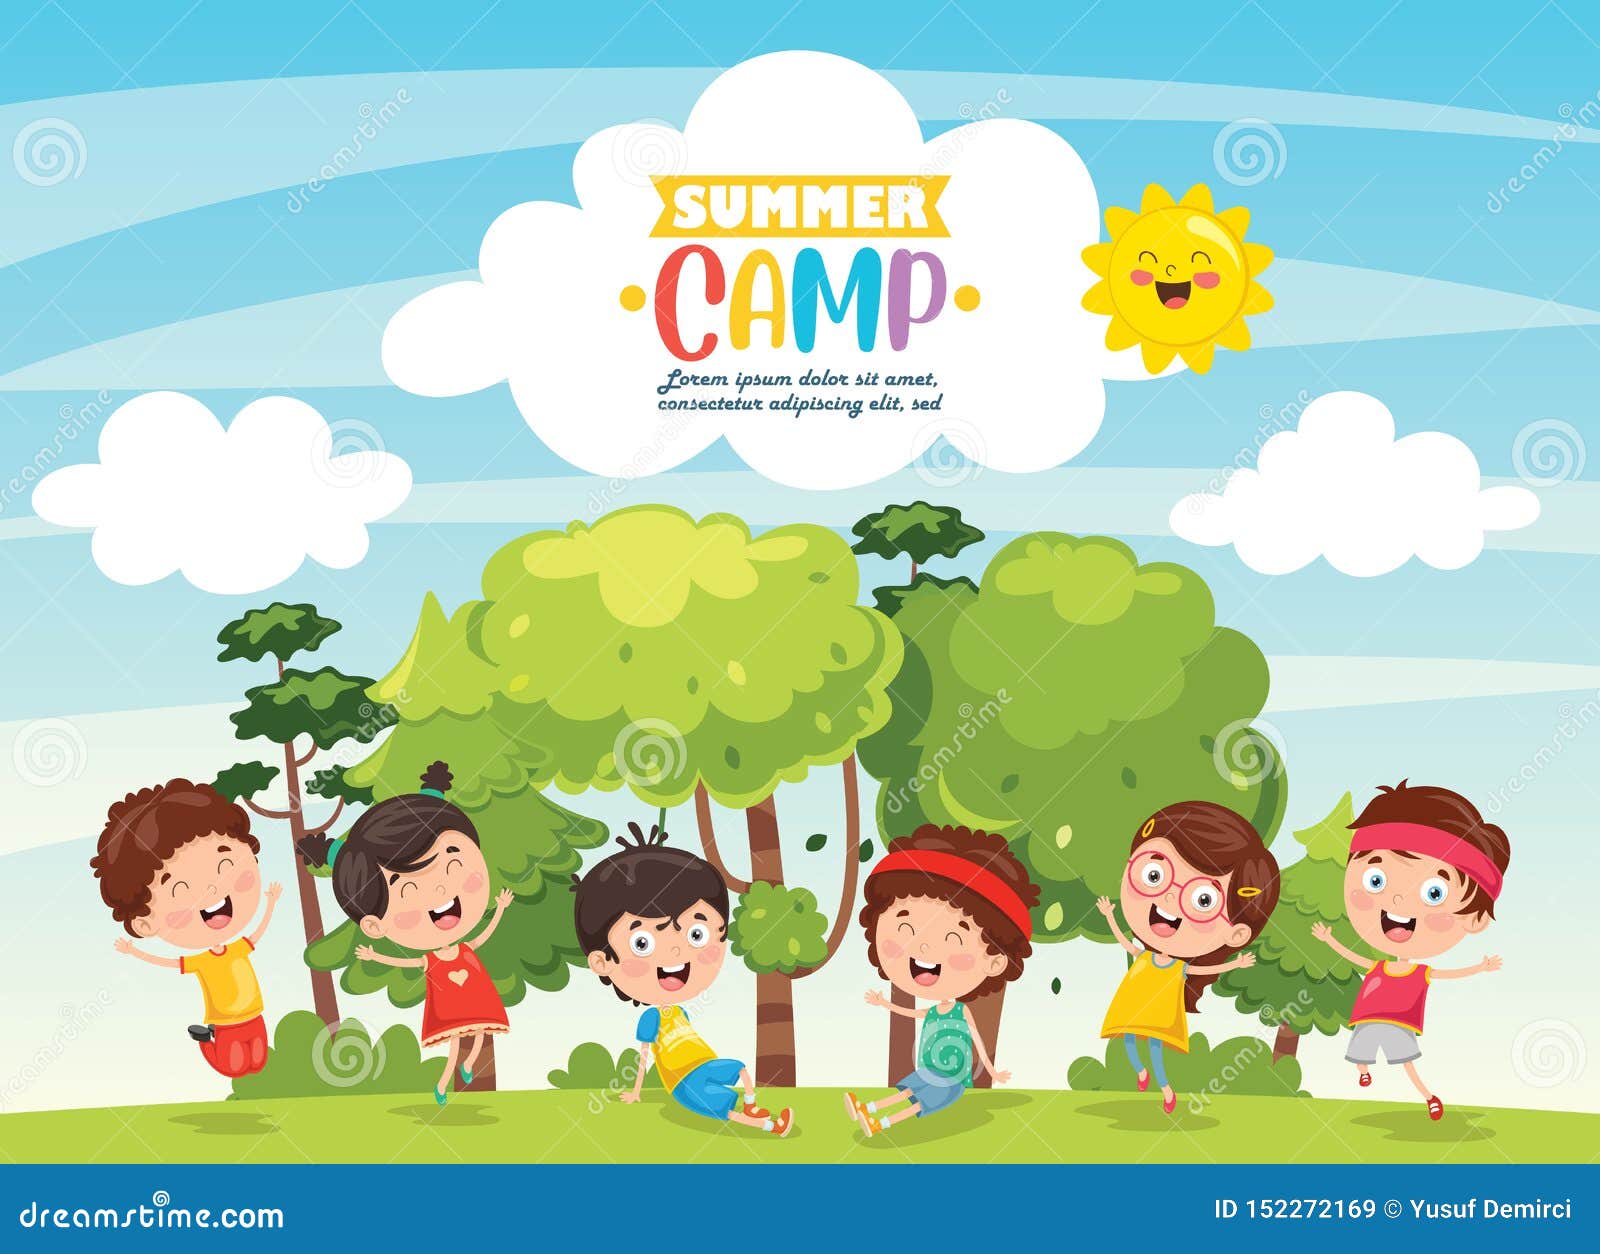 Vector Illustration of Summer Camp Kids Stock Vector Illustration of